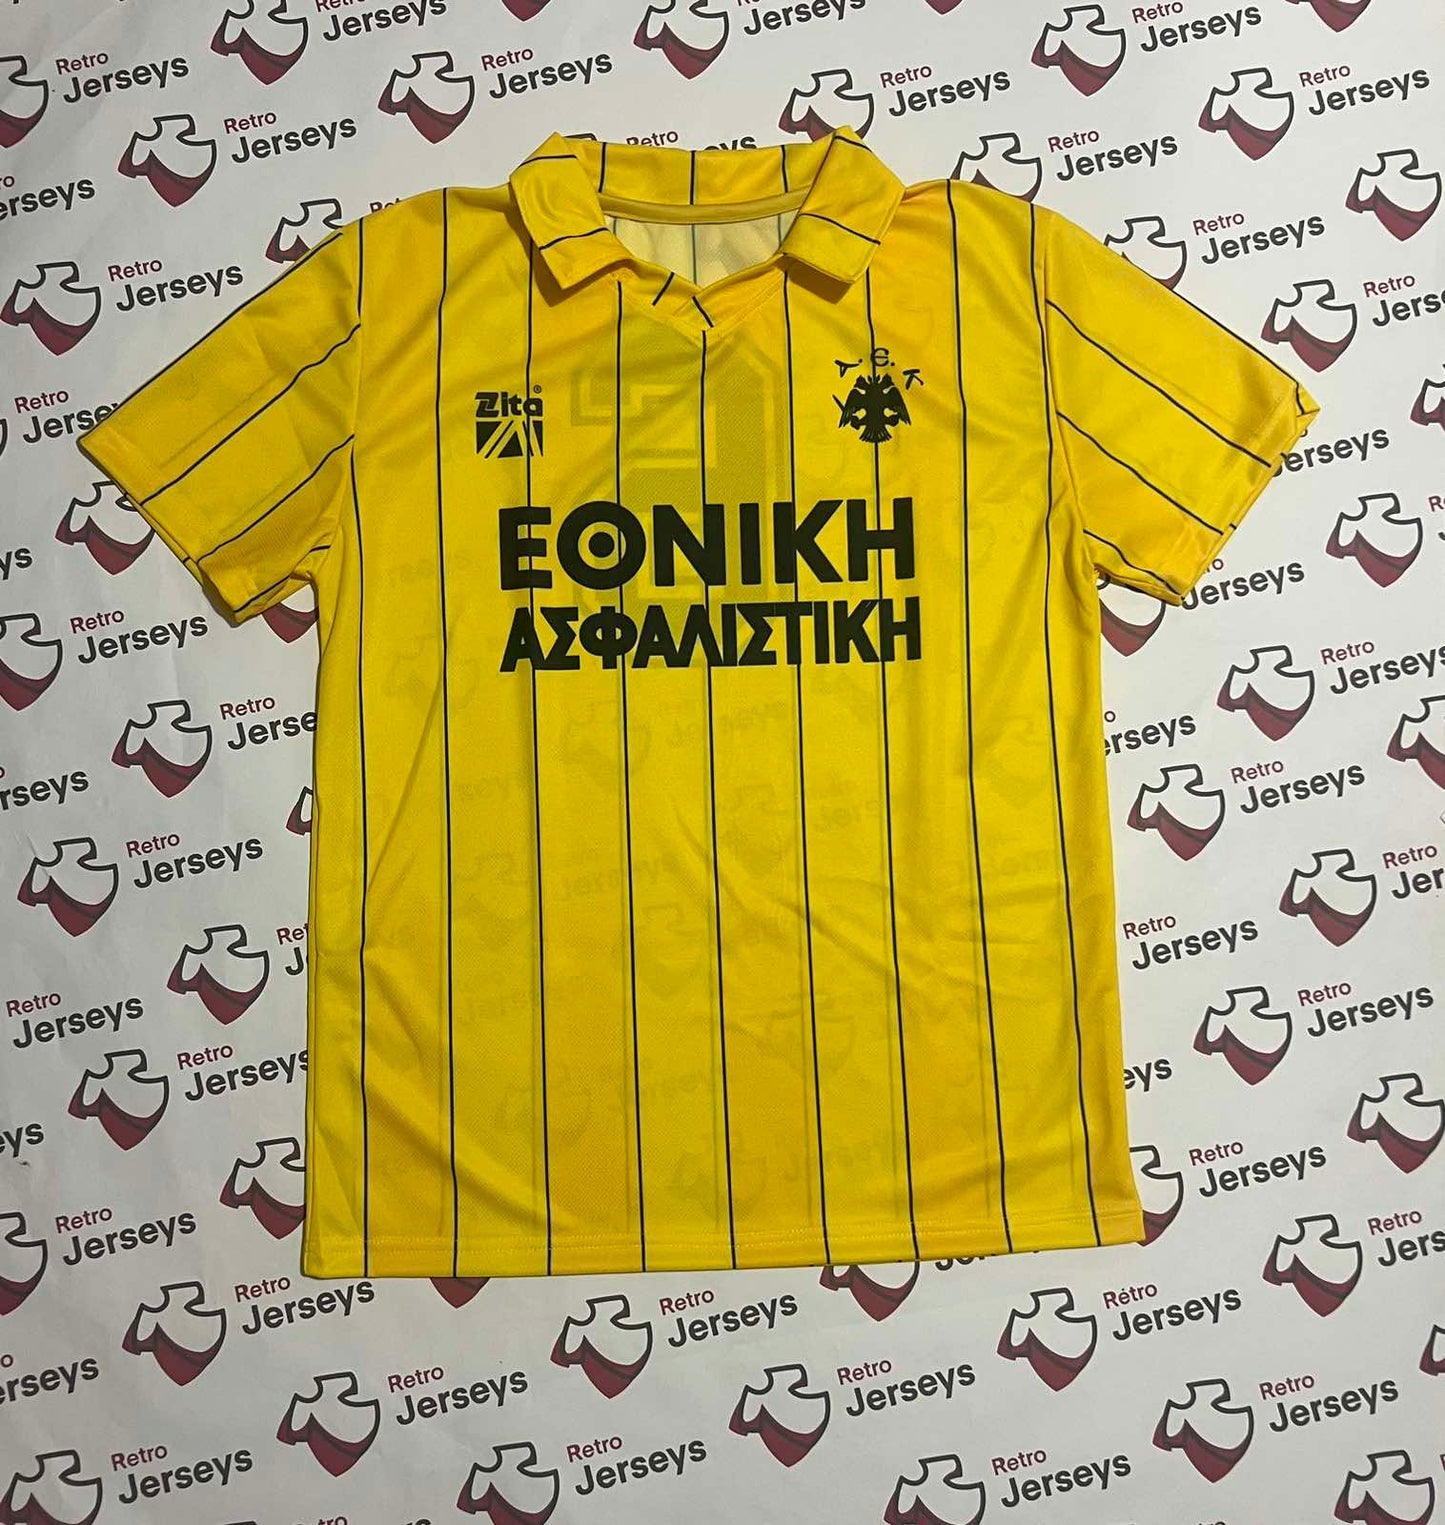 AEK Athens Shirt 1987-1988 Home - Retro Jerseys, φανέλα αεκ